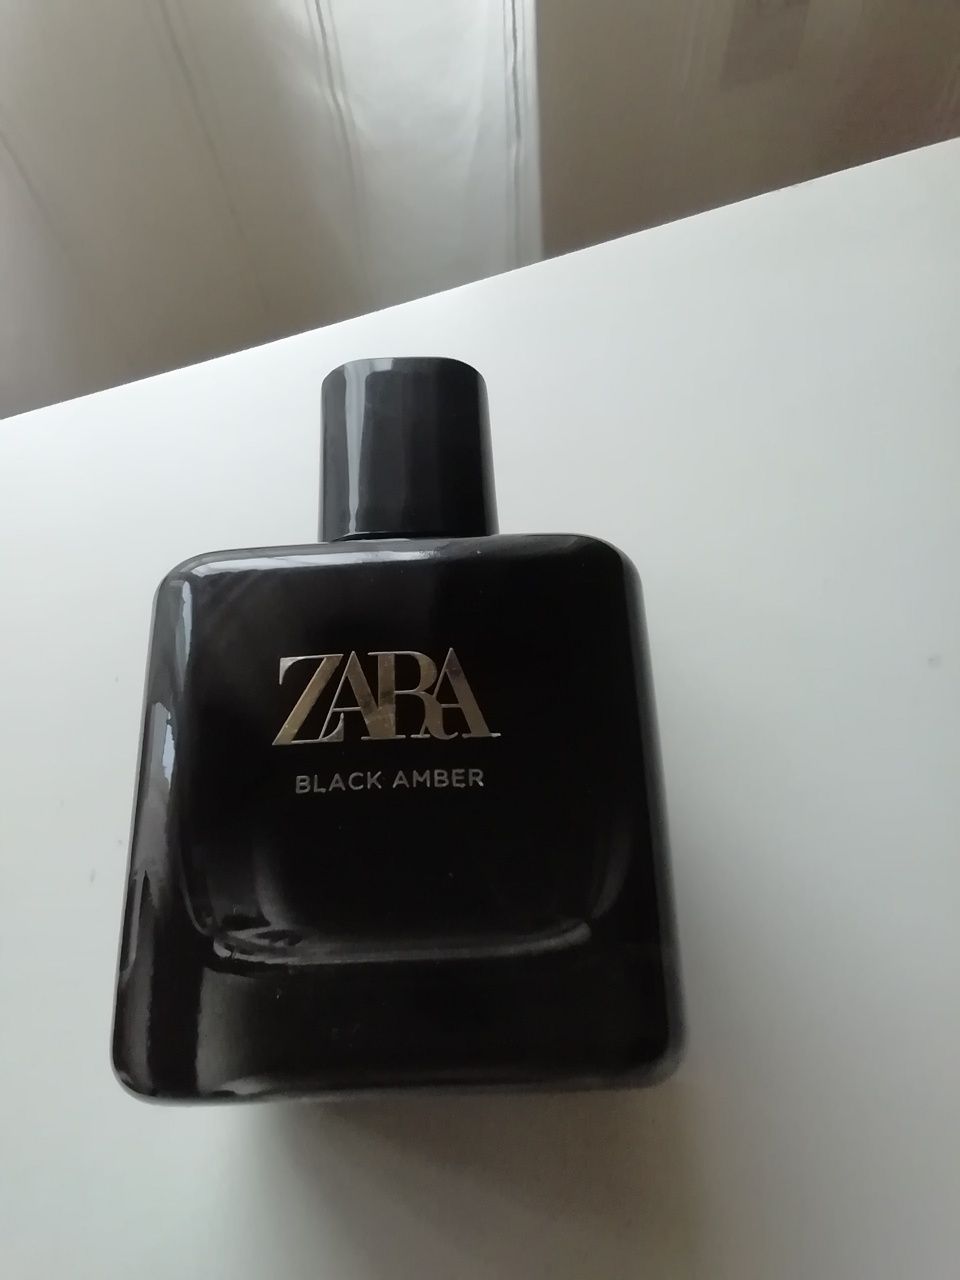 Frasco Black Amber da Zara, vazio